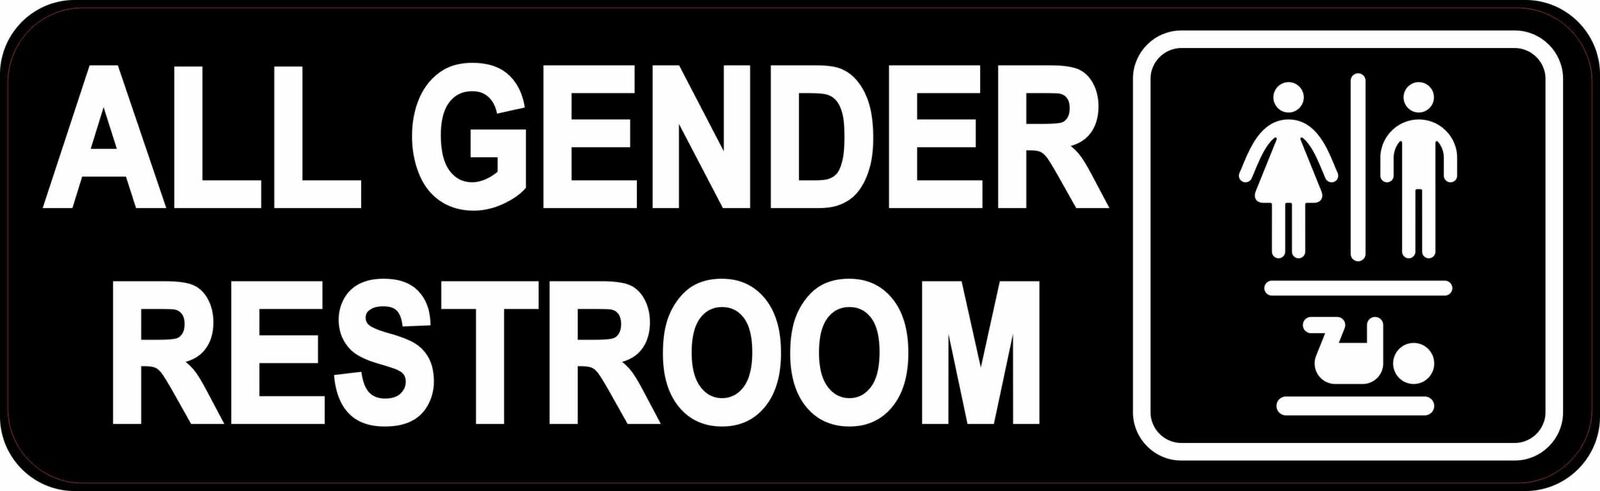 10in x 3in All Gender Restroom Vinyl Sticker Business Sign Decal